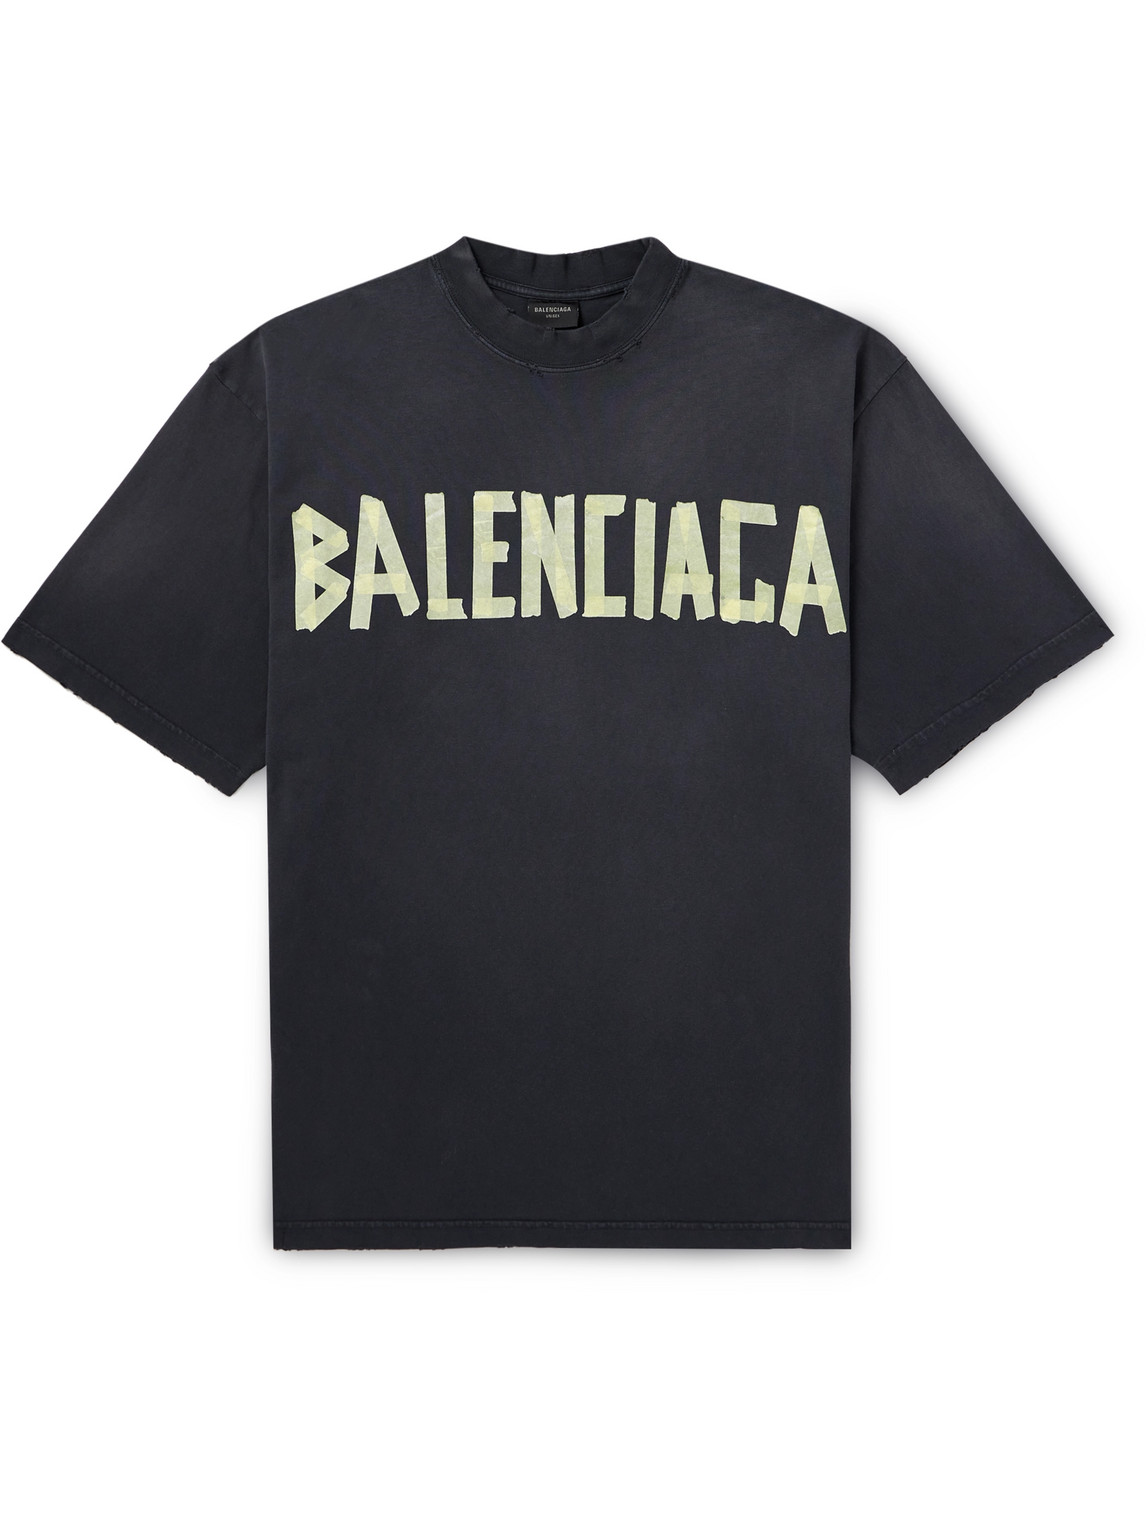 Balenciaga - Oversized Distressed Logo-Print Cotton-Jersey T-Shirt - Men - Black - M von Balenciaga